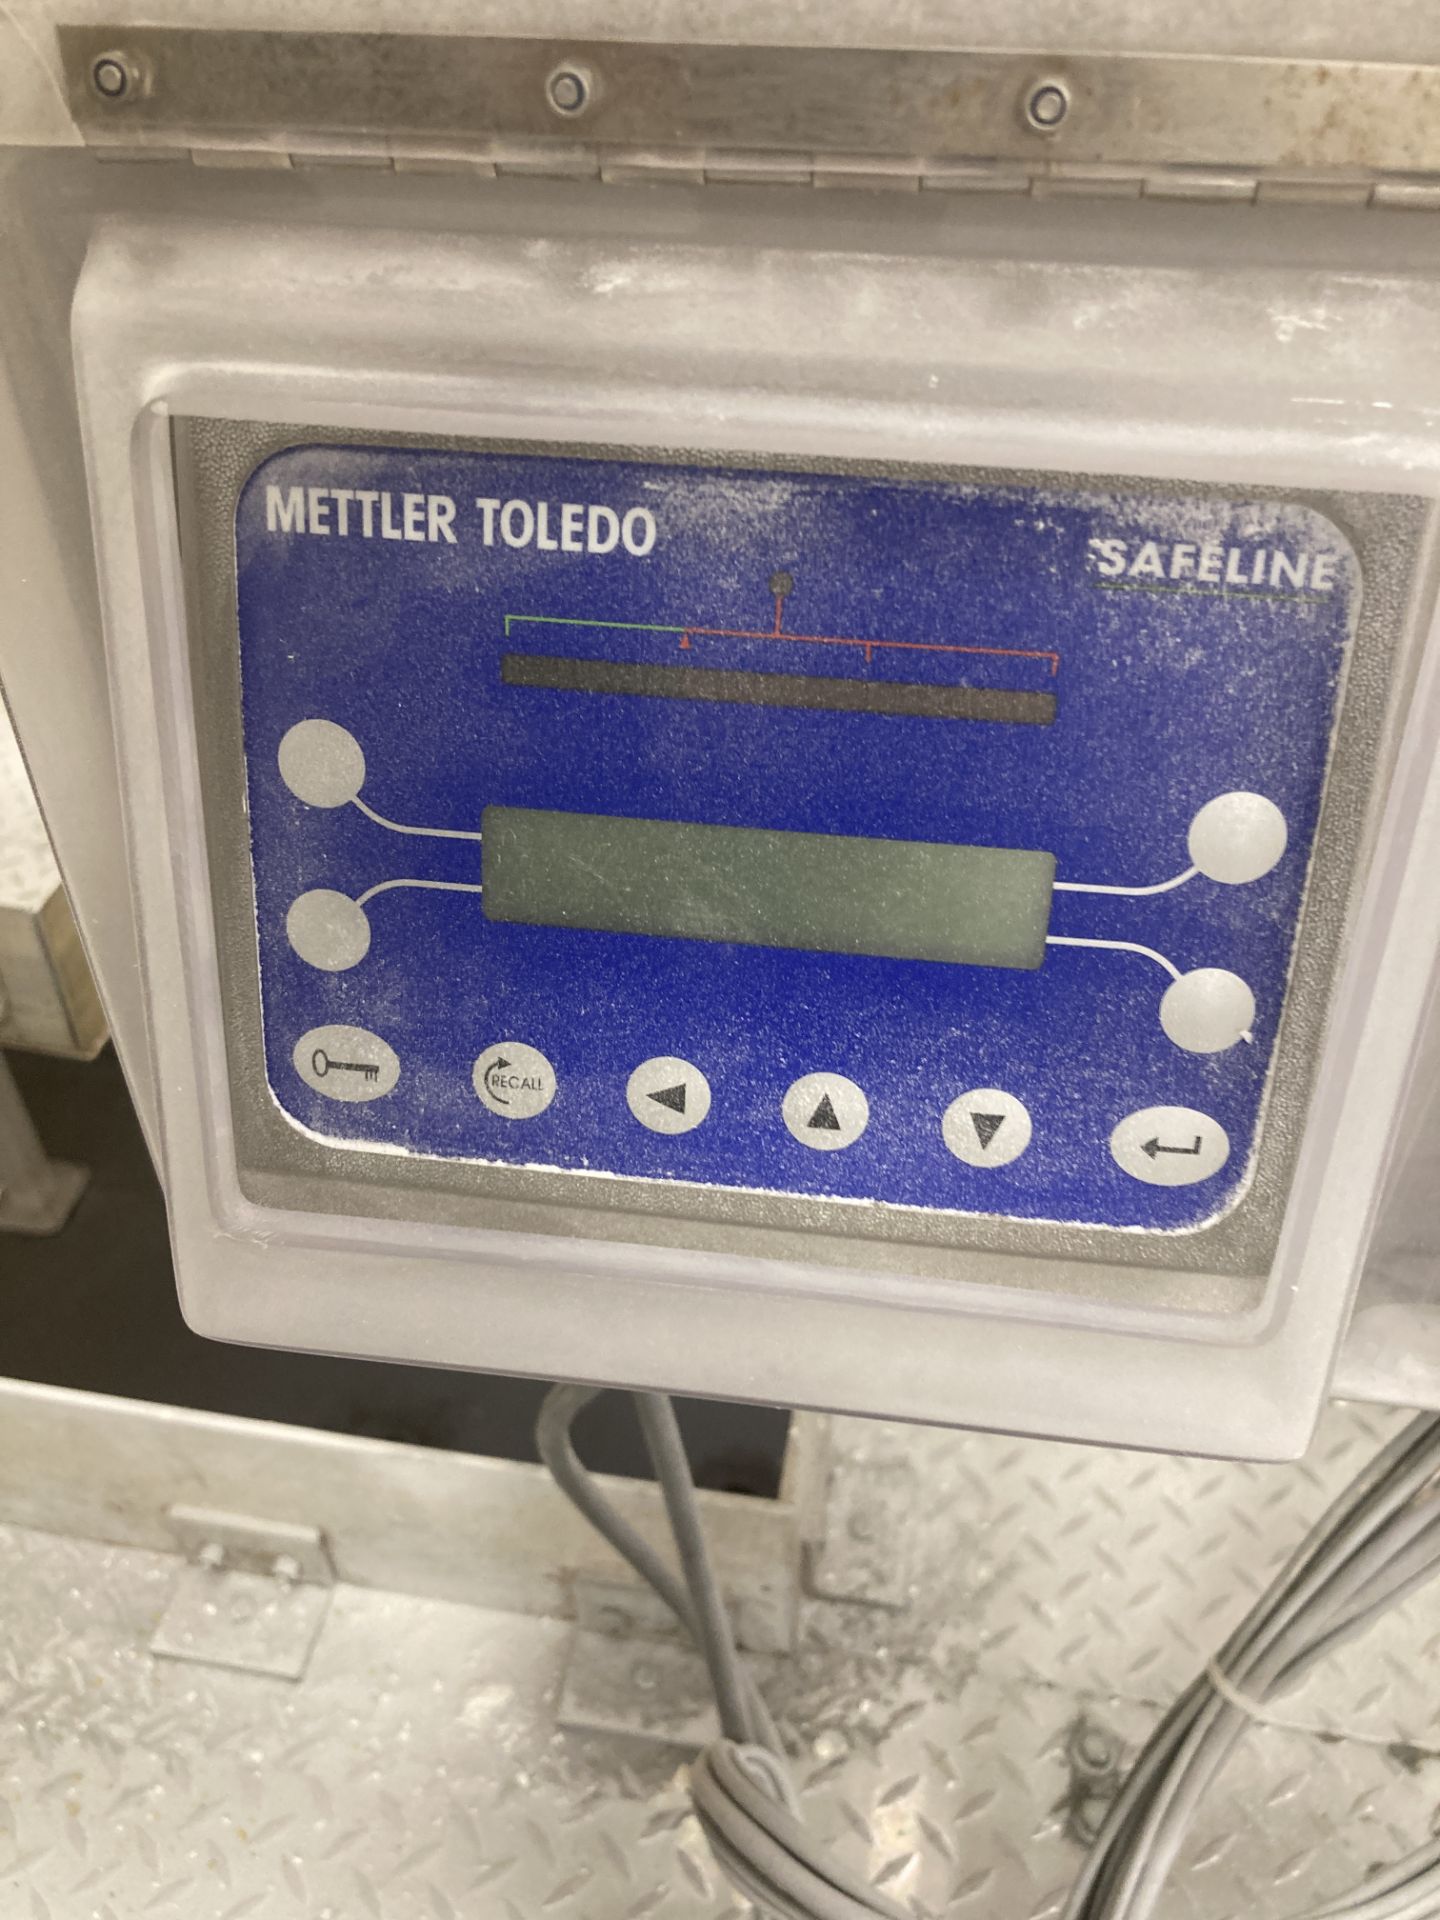 Mettler Toledo Safeline metal detector Rigging Fee: $ 625 - Image 3 of 3